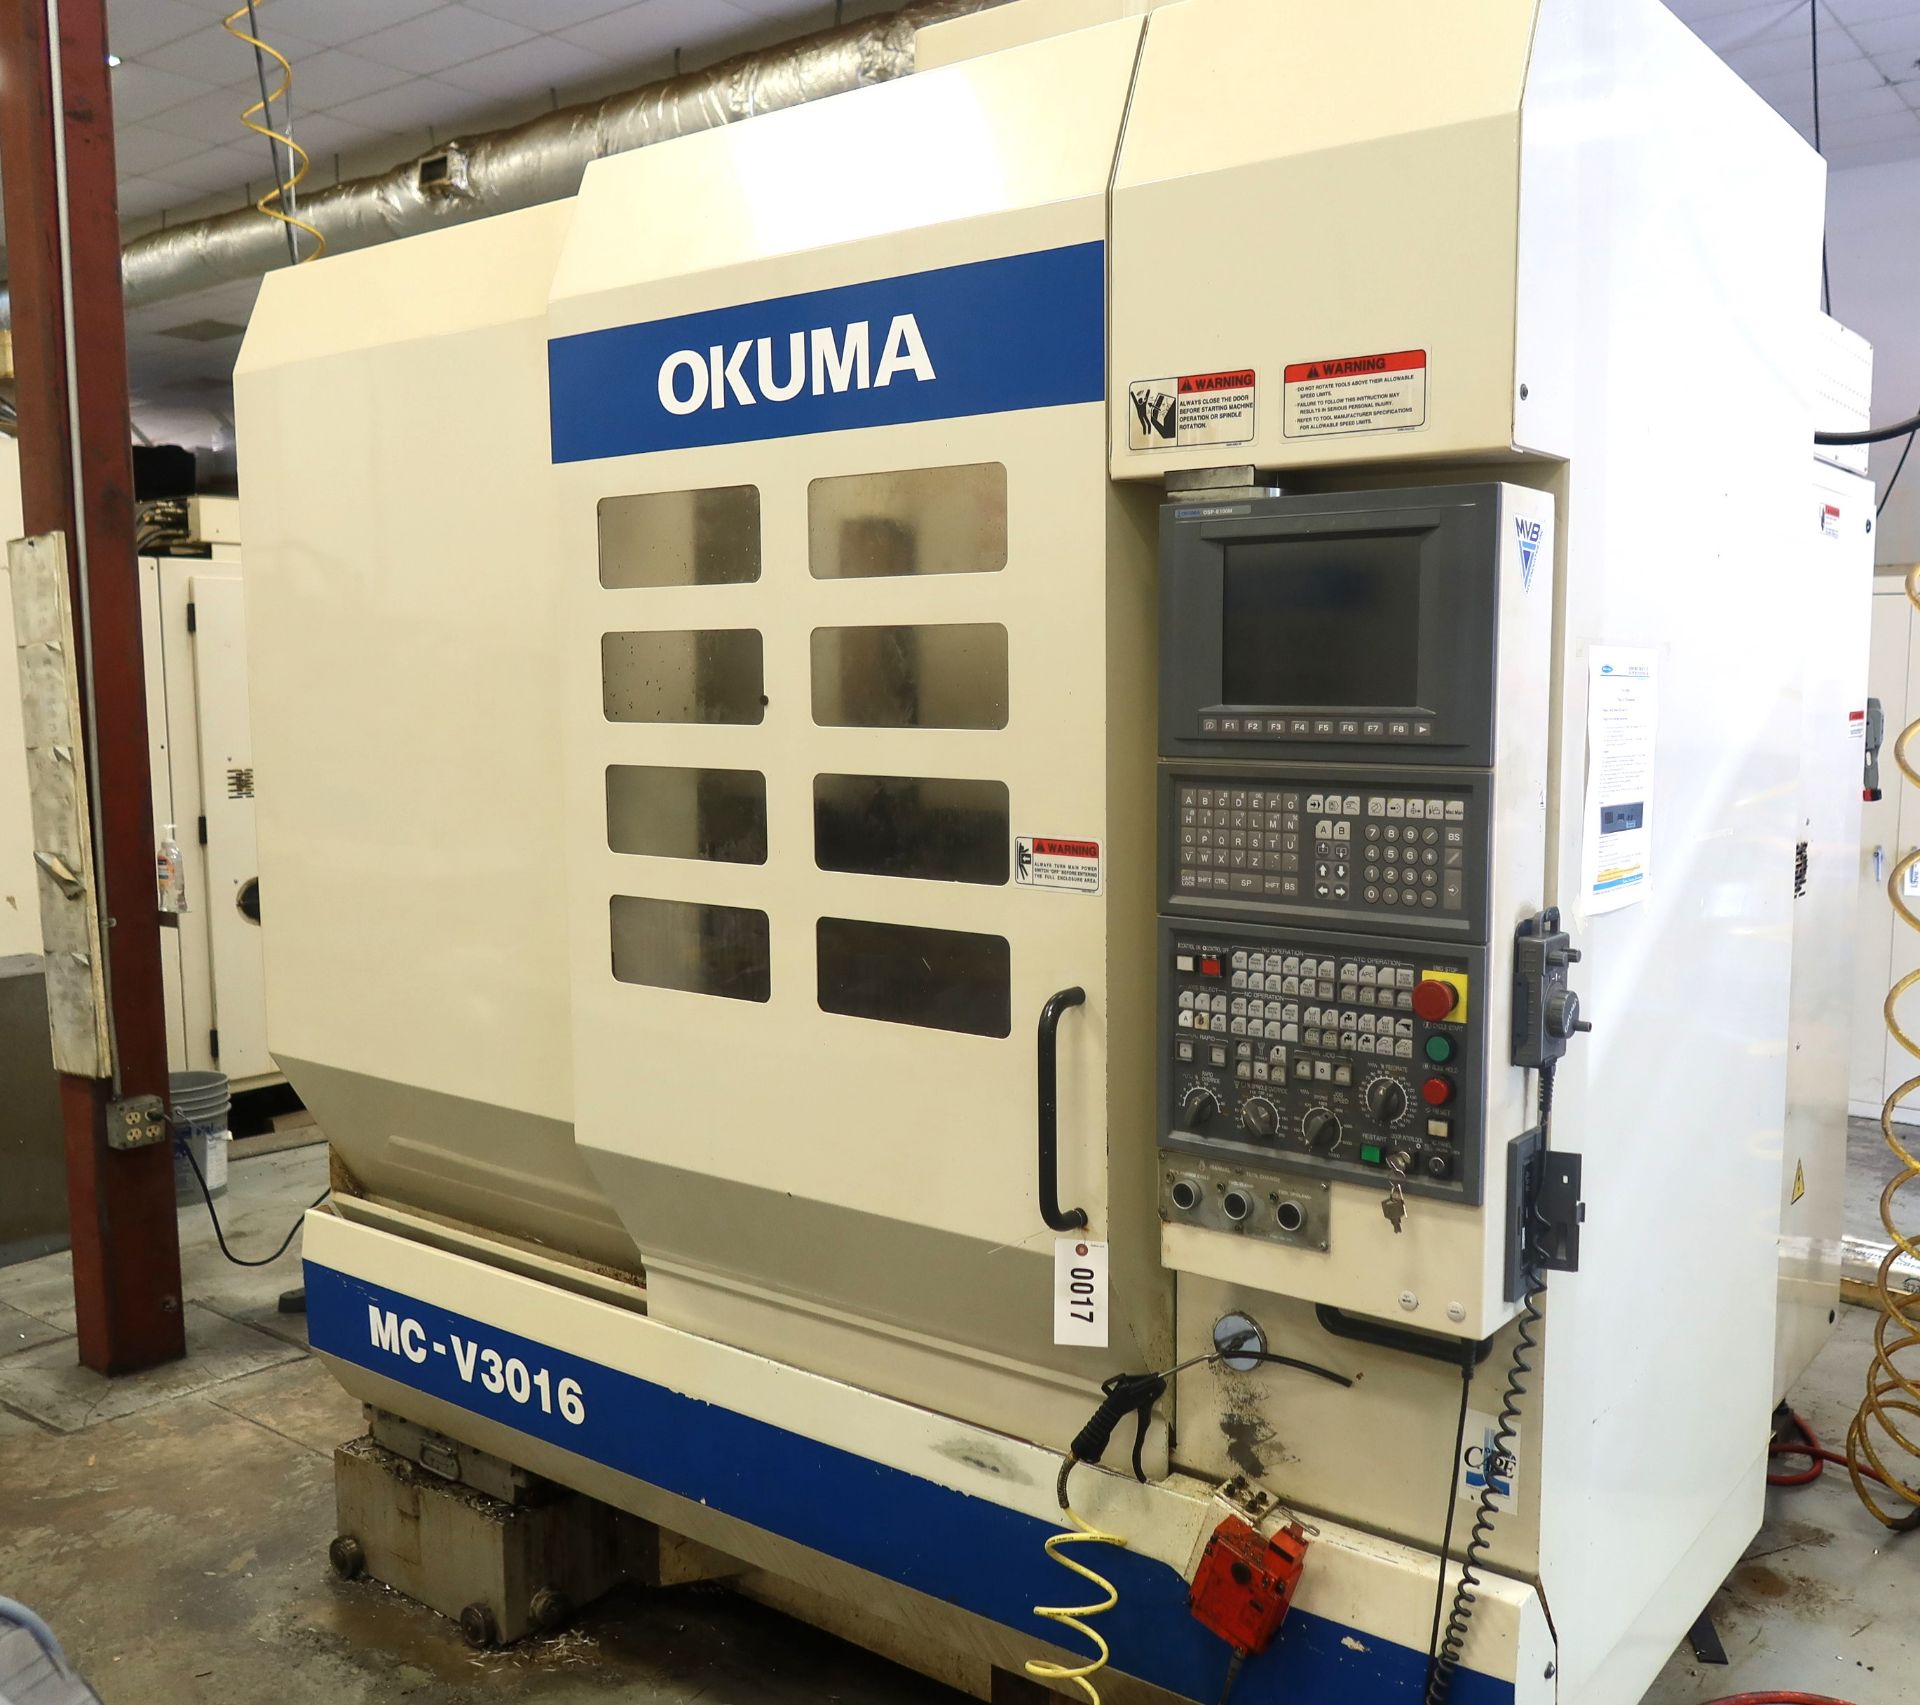 2005 OKUMA MC-V3016 5-AXIS CNC VERTICAL MACHINING CENTER, SN 0139 - Image 8 of 12